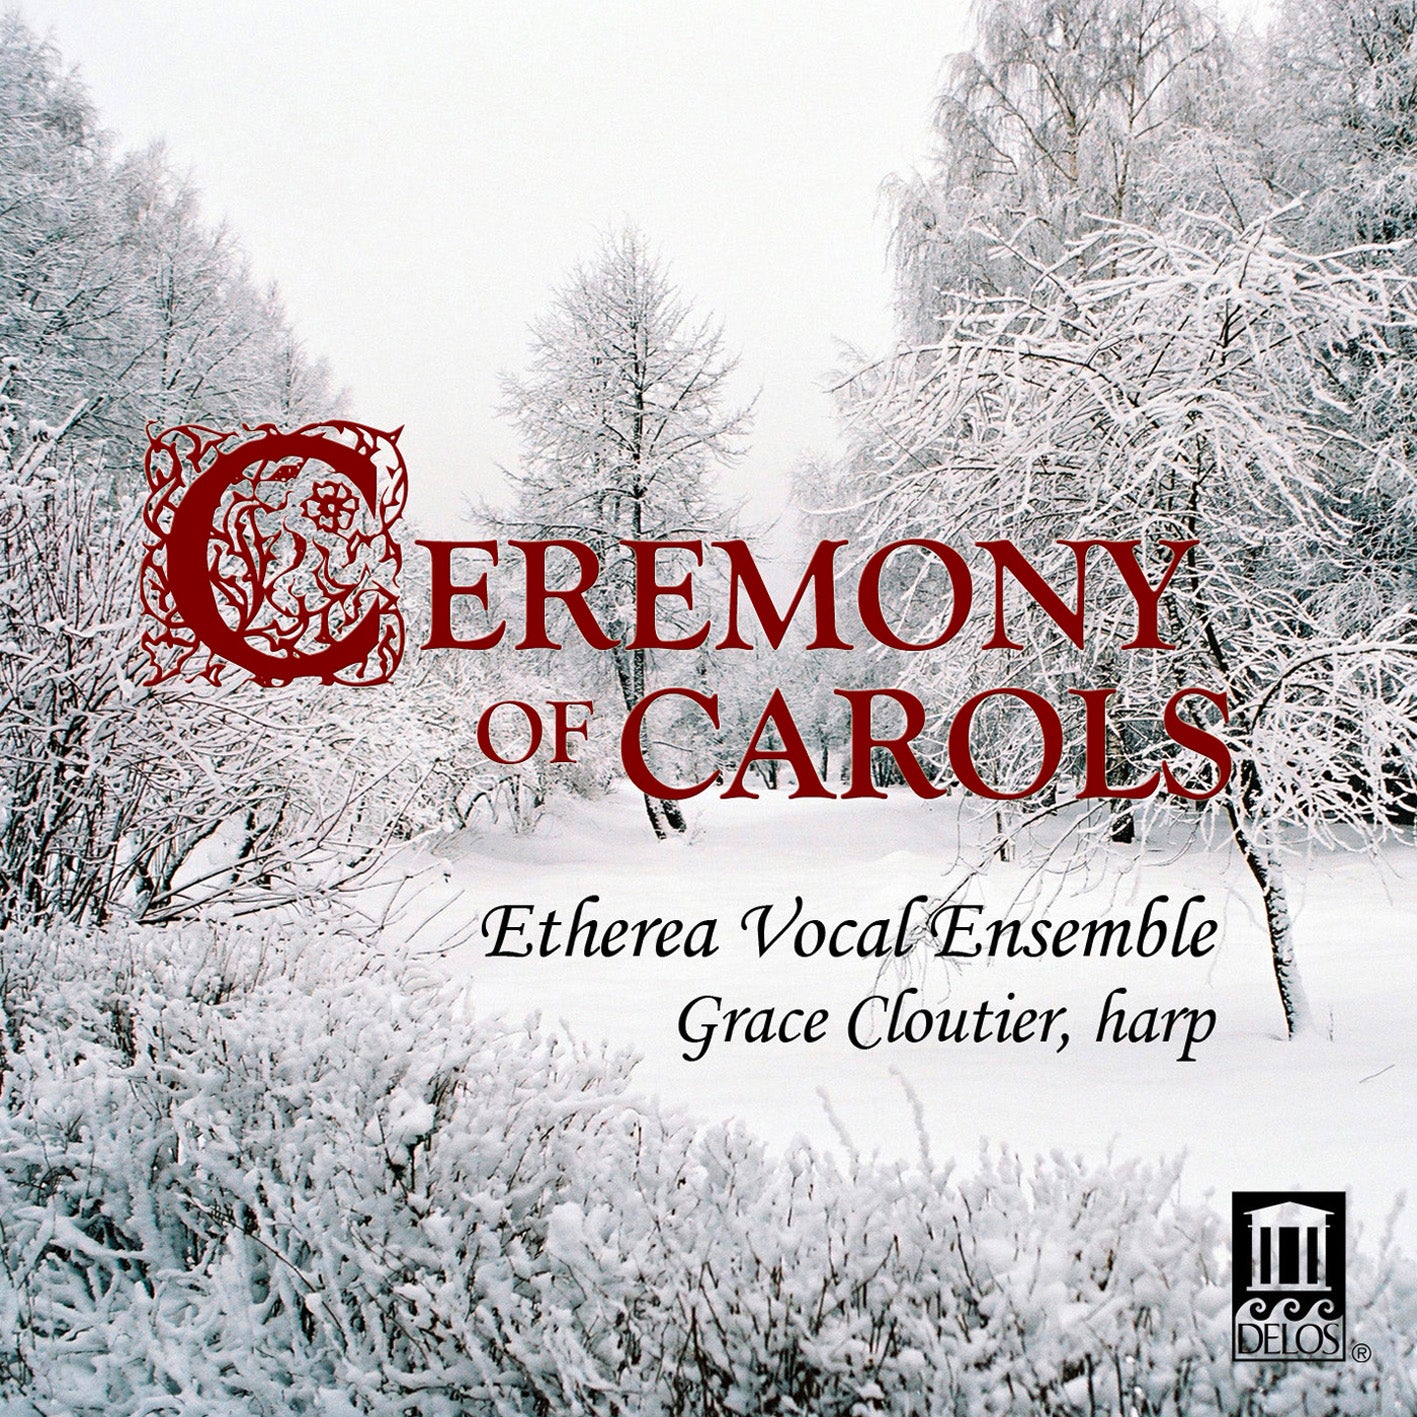 Ceremony Of Carols / Cloutier, Etherea Vocal Ensemble